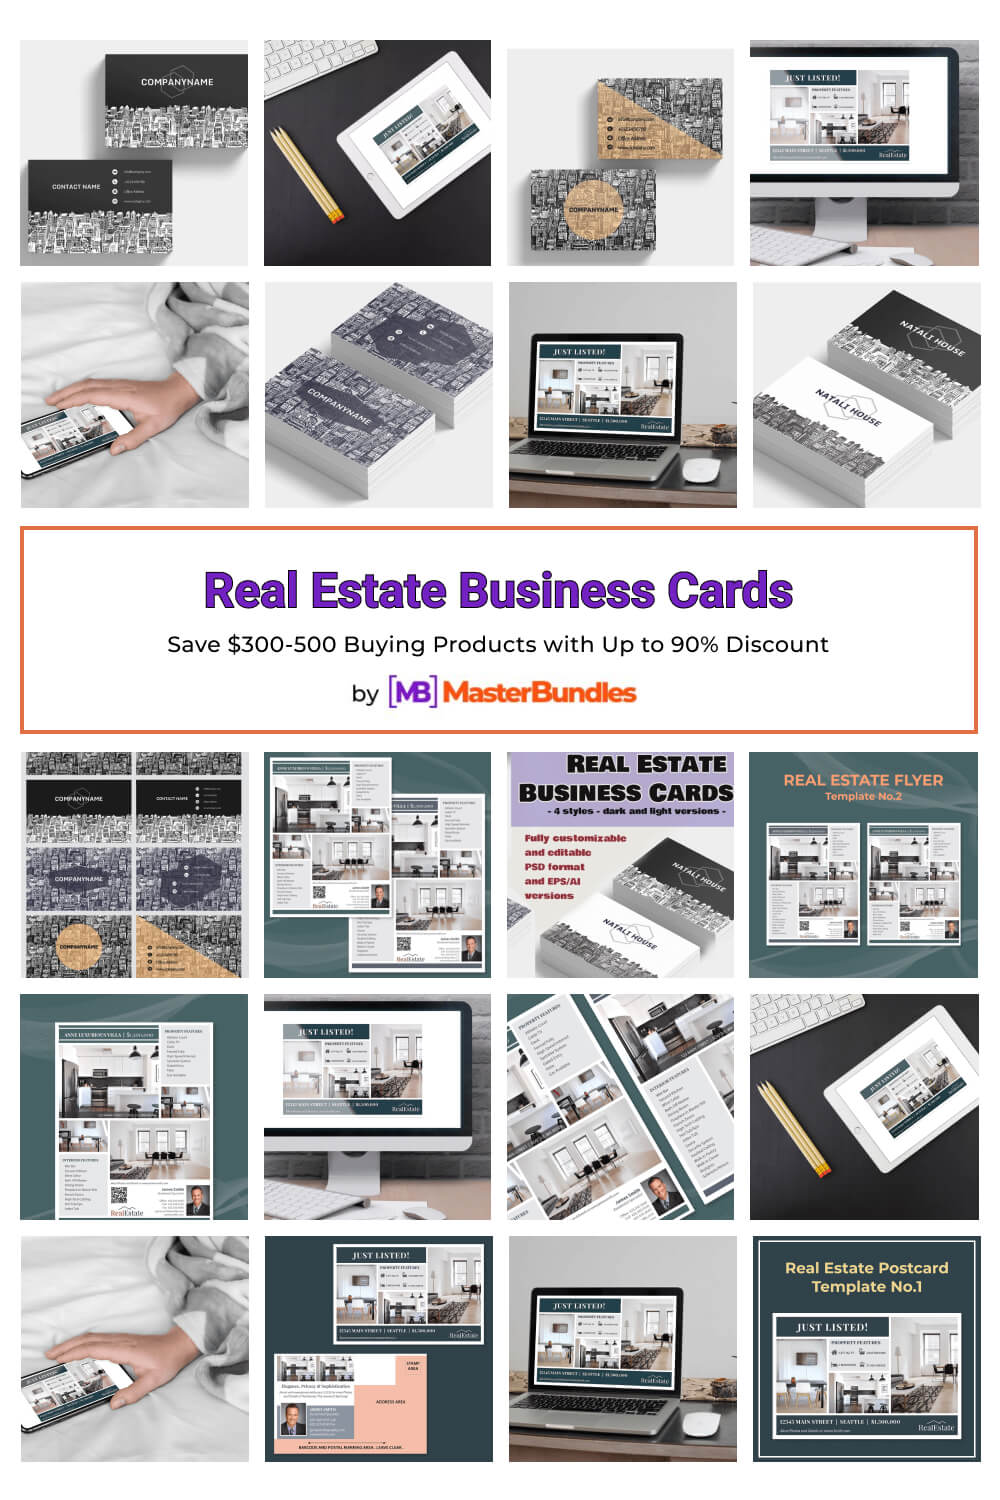 real estate business cards pinterest image.